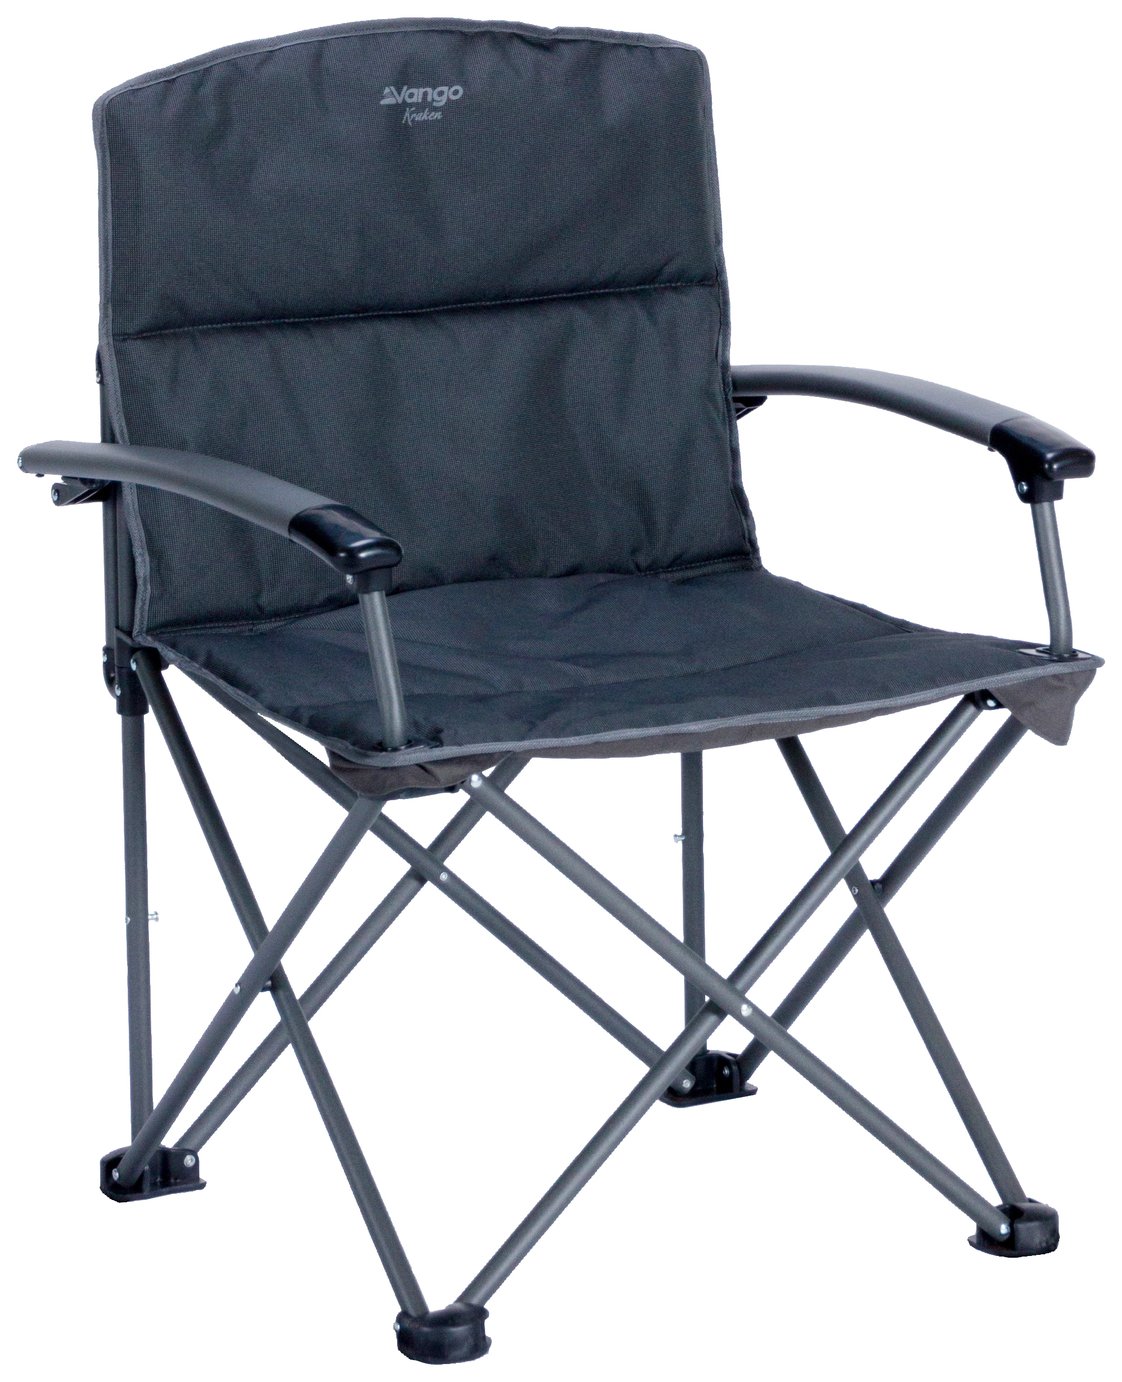 folding camping chairs asda